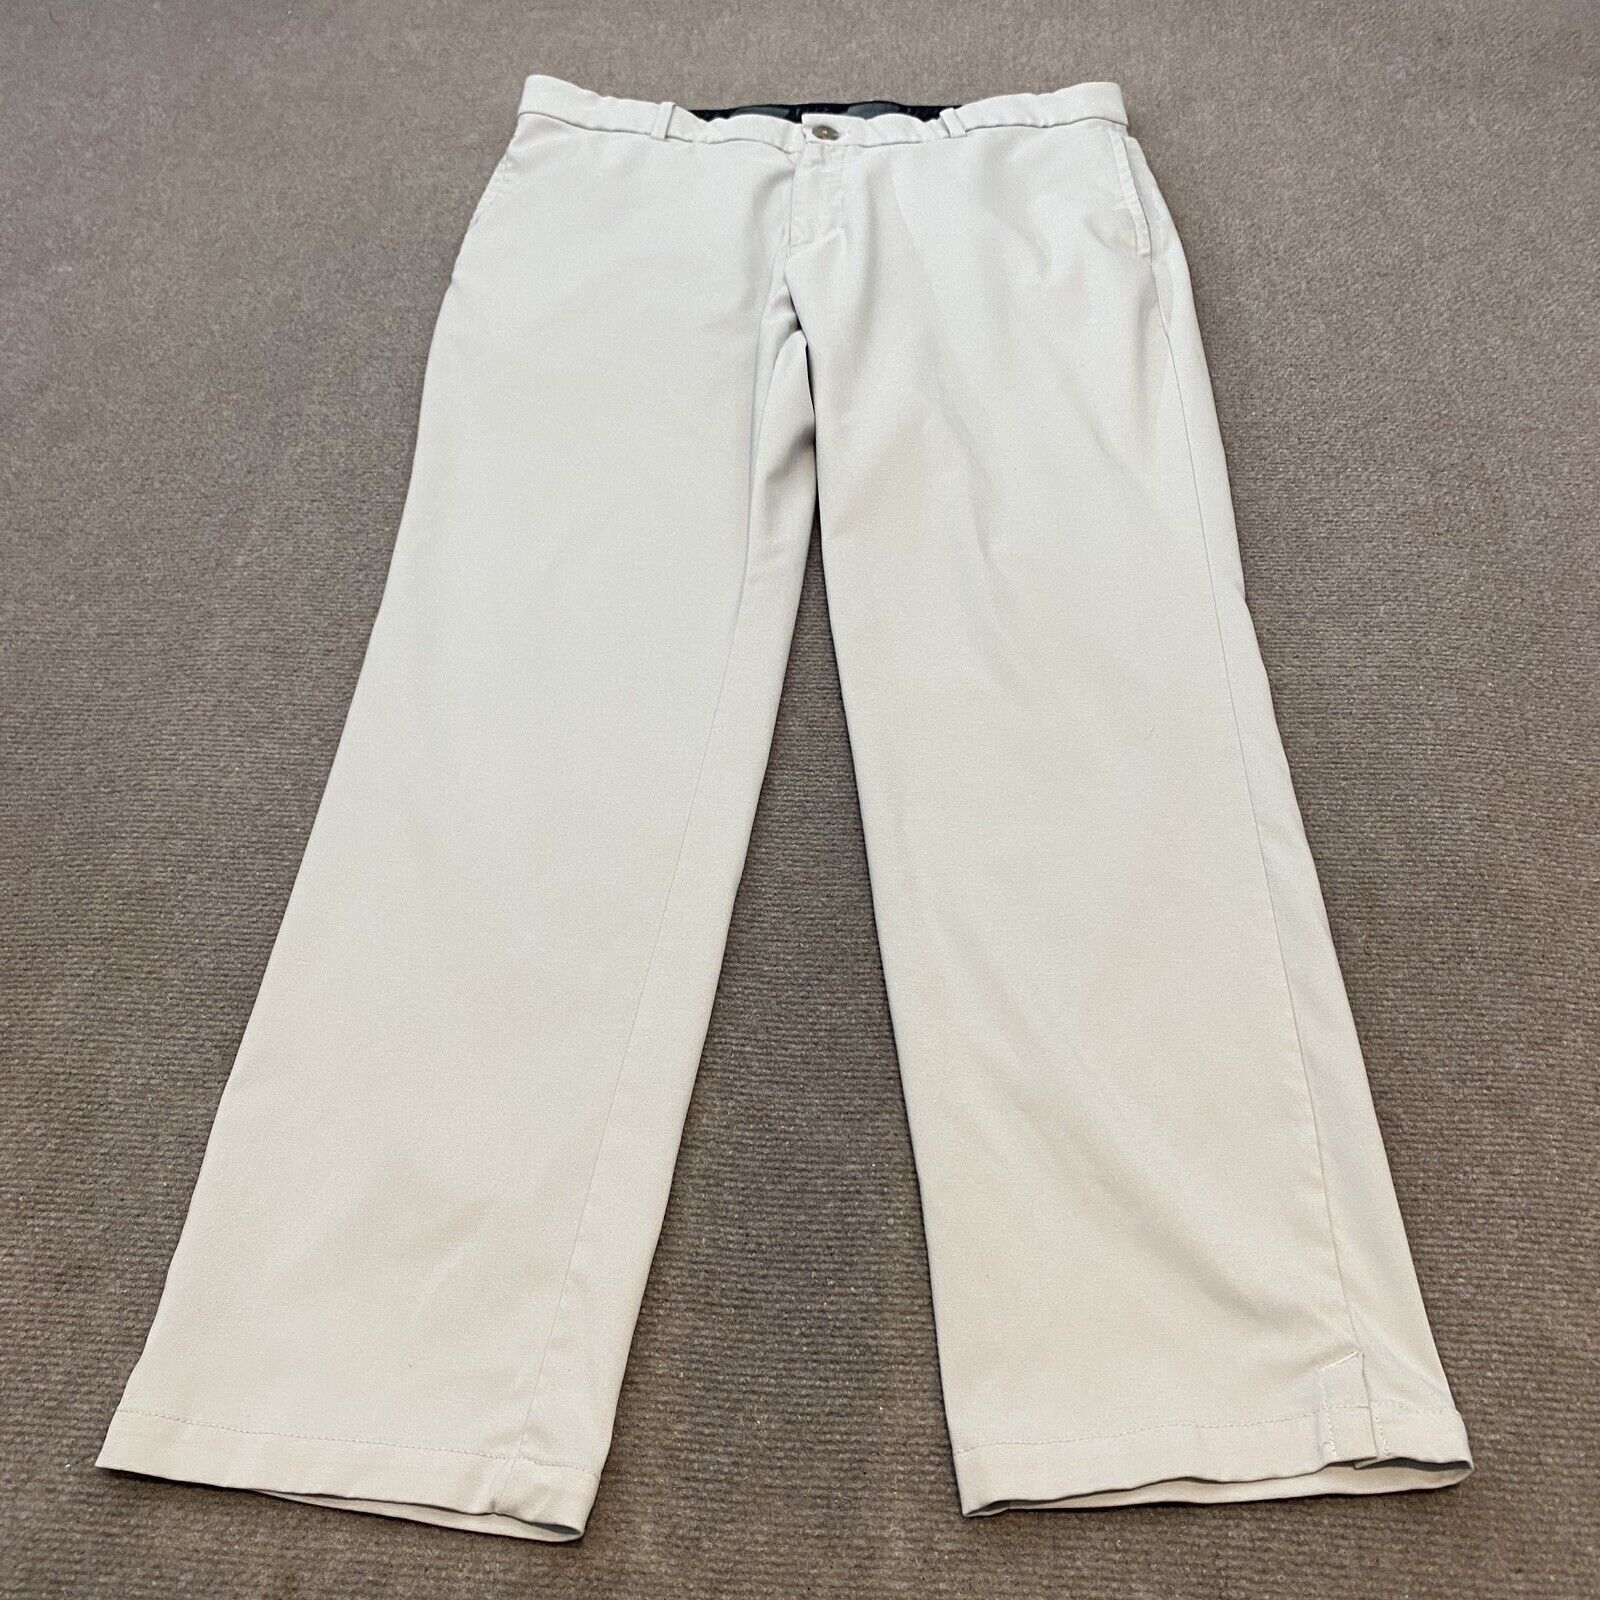 Nike Golf Pants Men\'s 35 Light Gray Flex Flat Front Stretch Woven Size 35x30